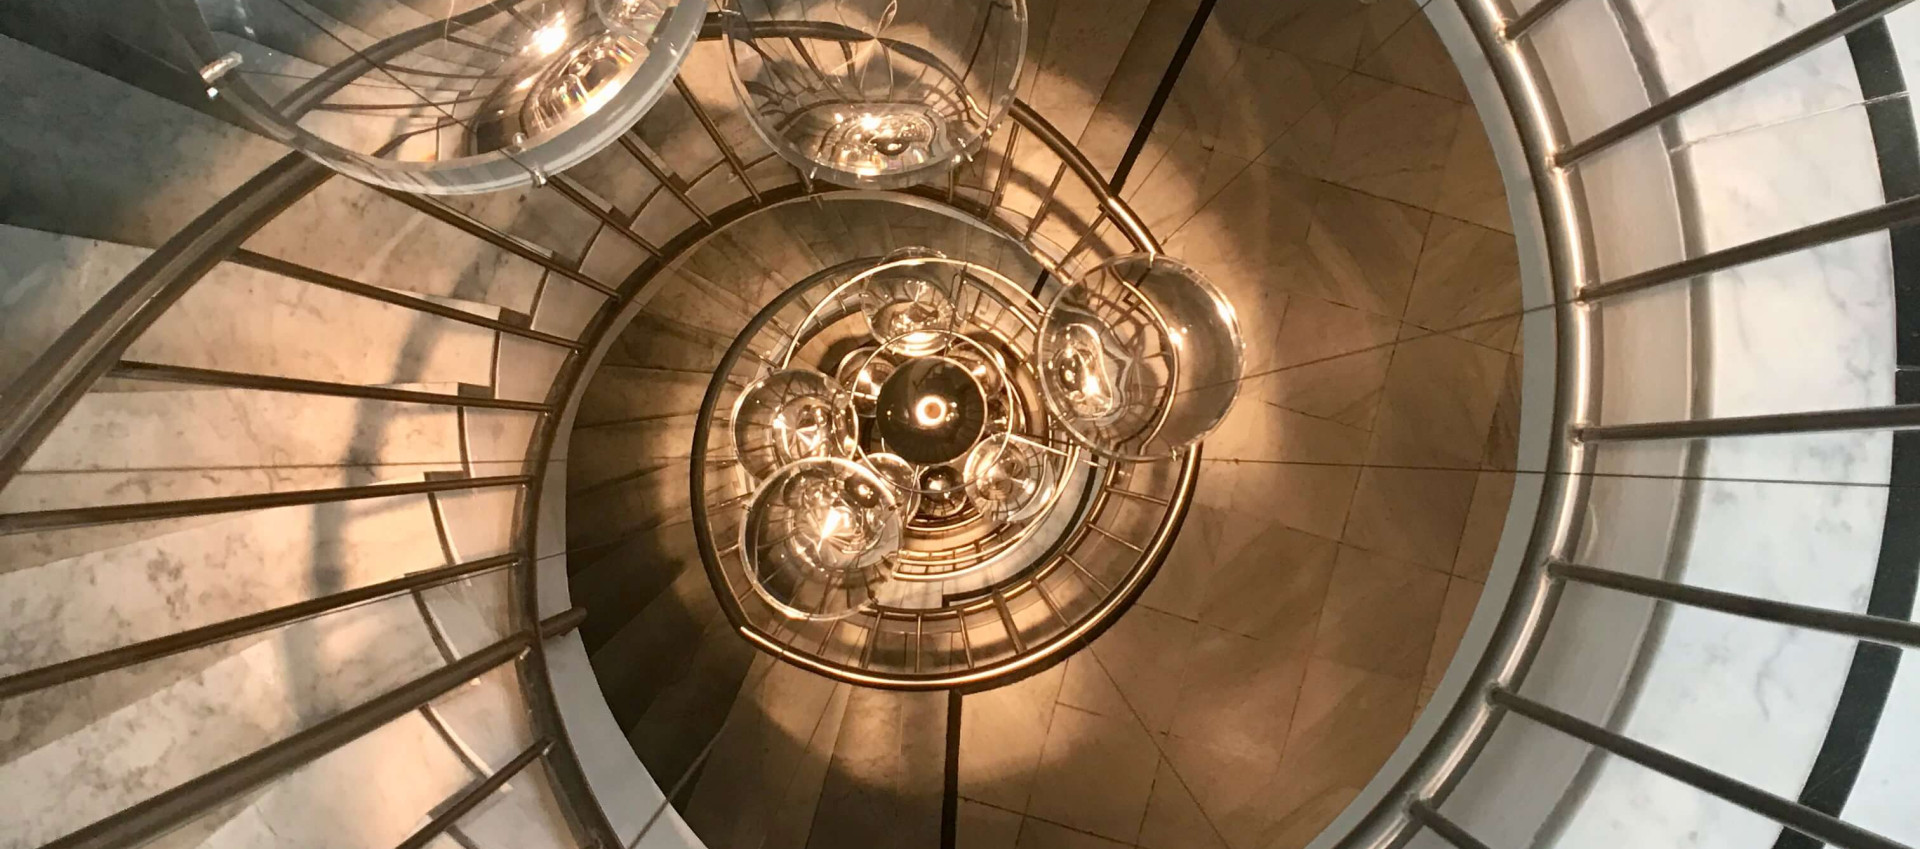 birds eye view of spiral staircase